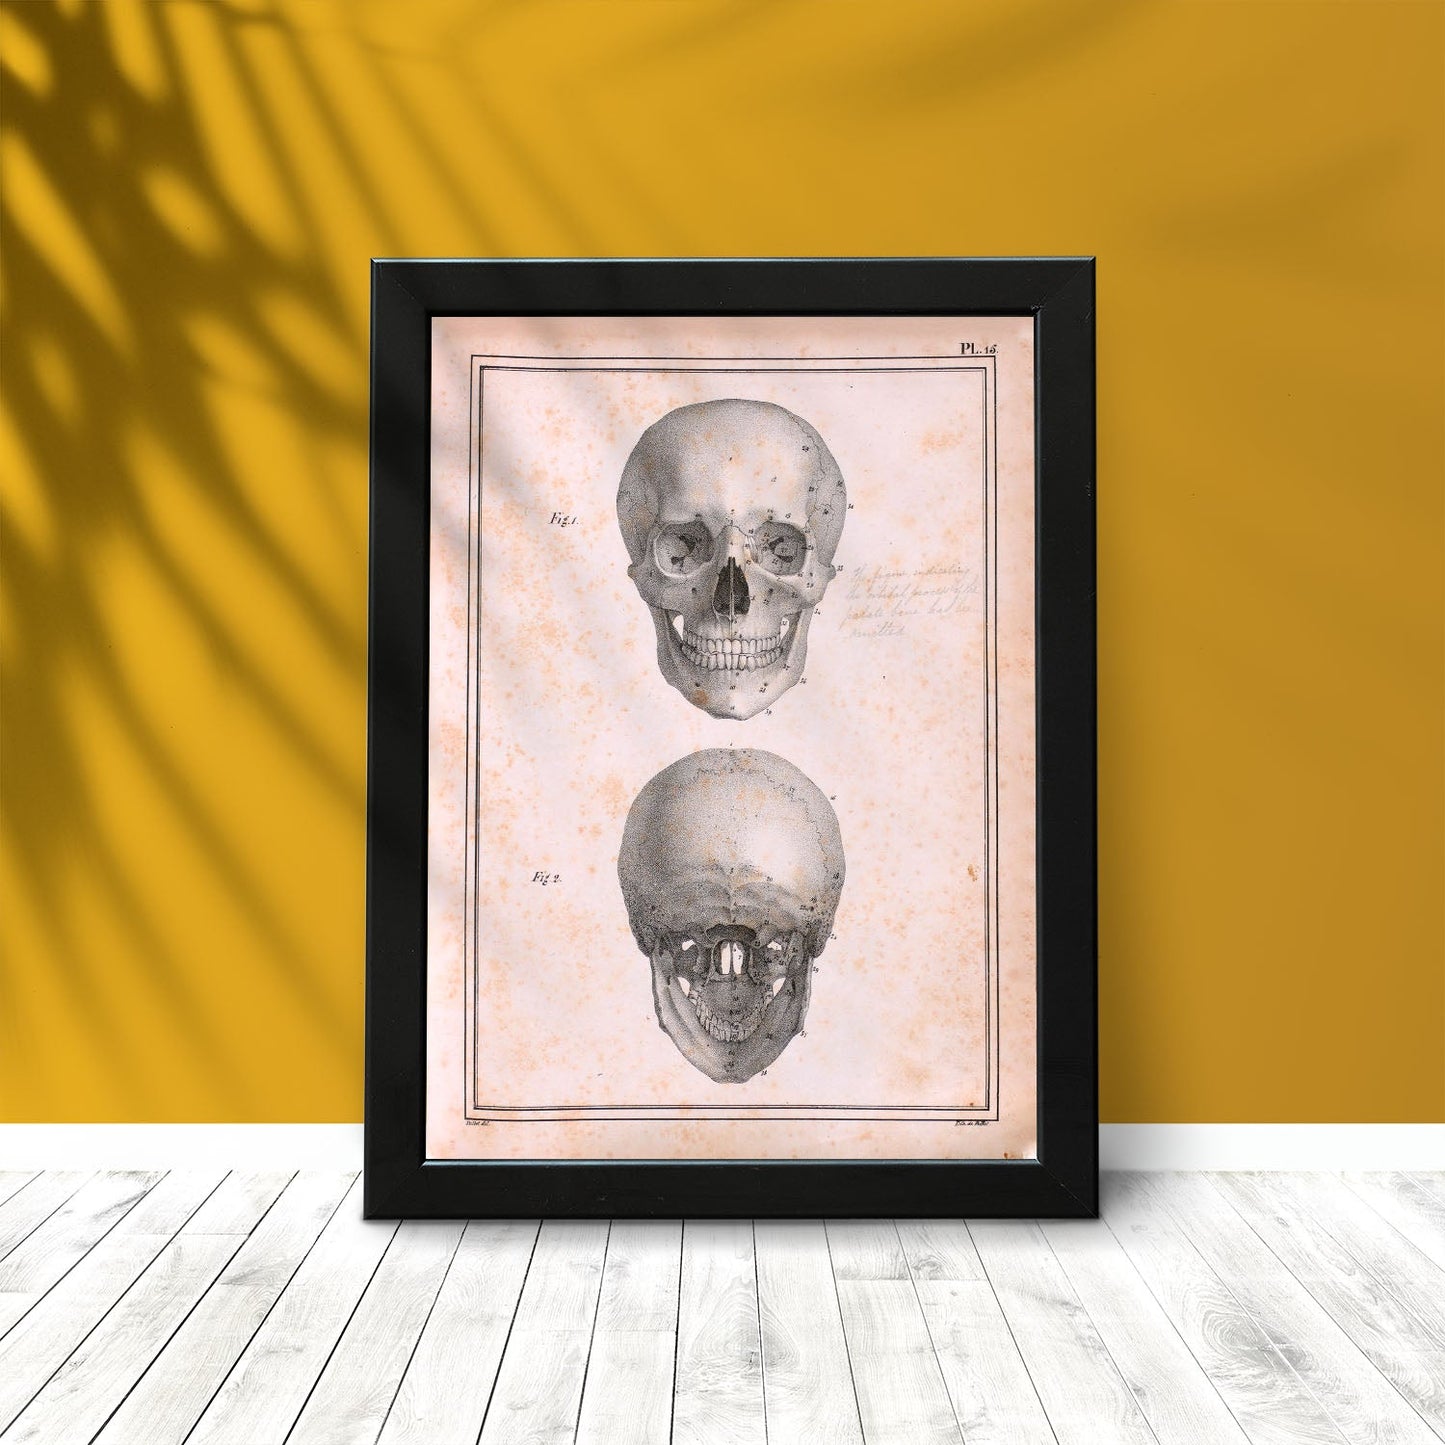 Paillou Skull-Artwork-Nacnic-Nacnic Estudio SL